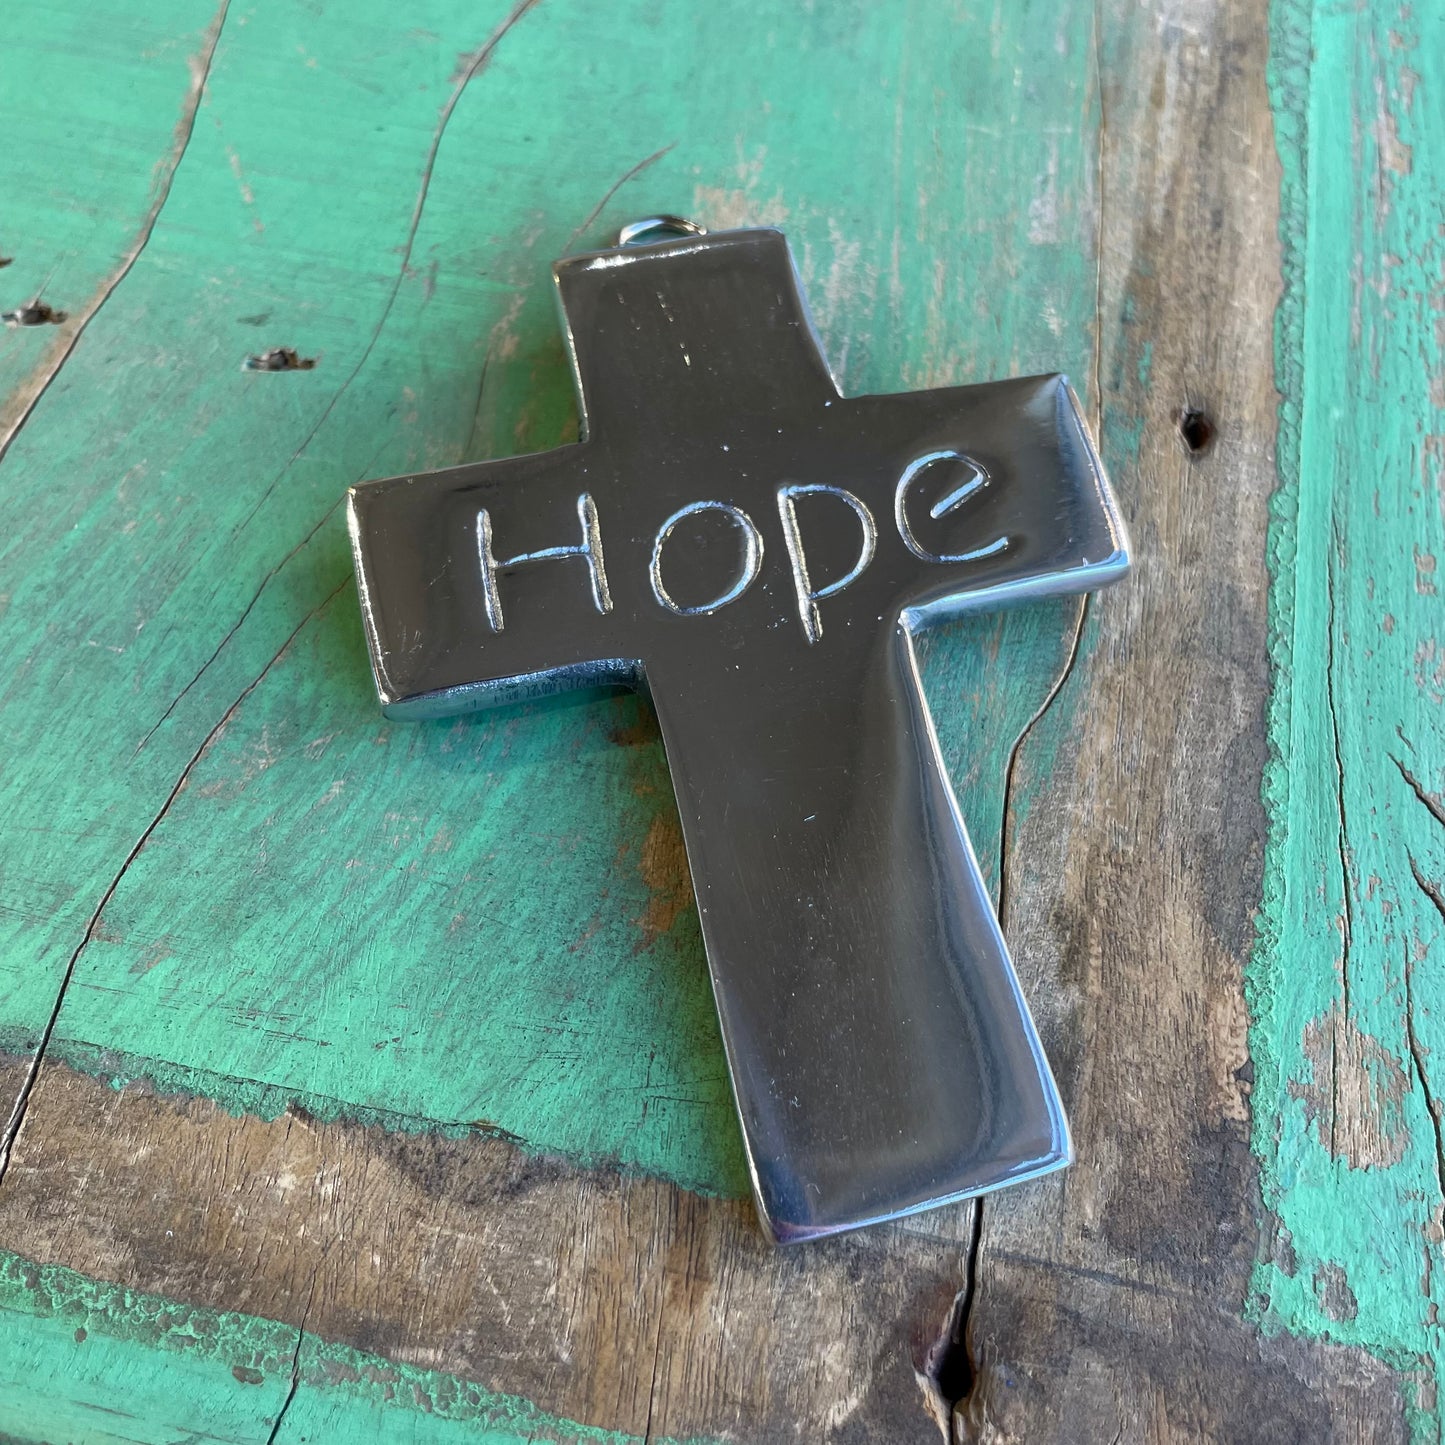 Faith, Hope, Love Pewter Crosses